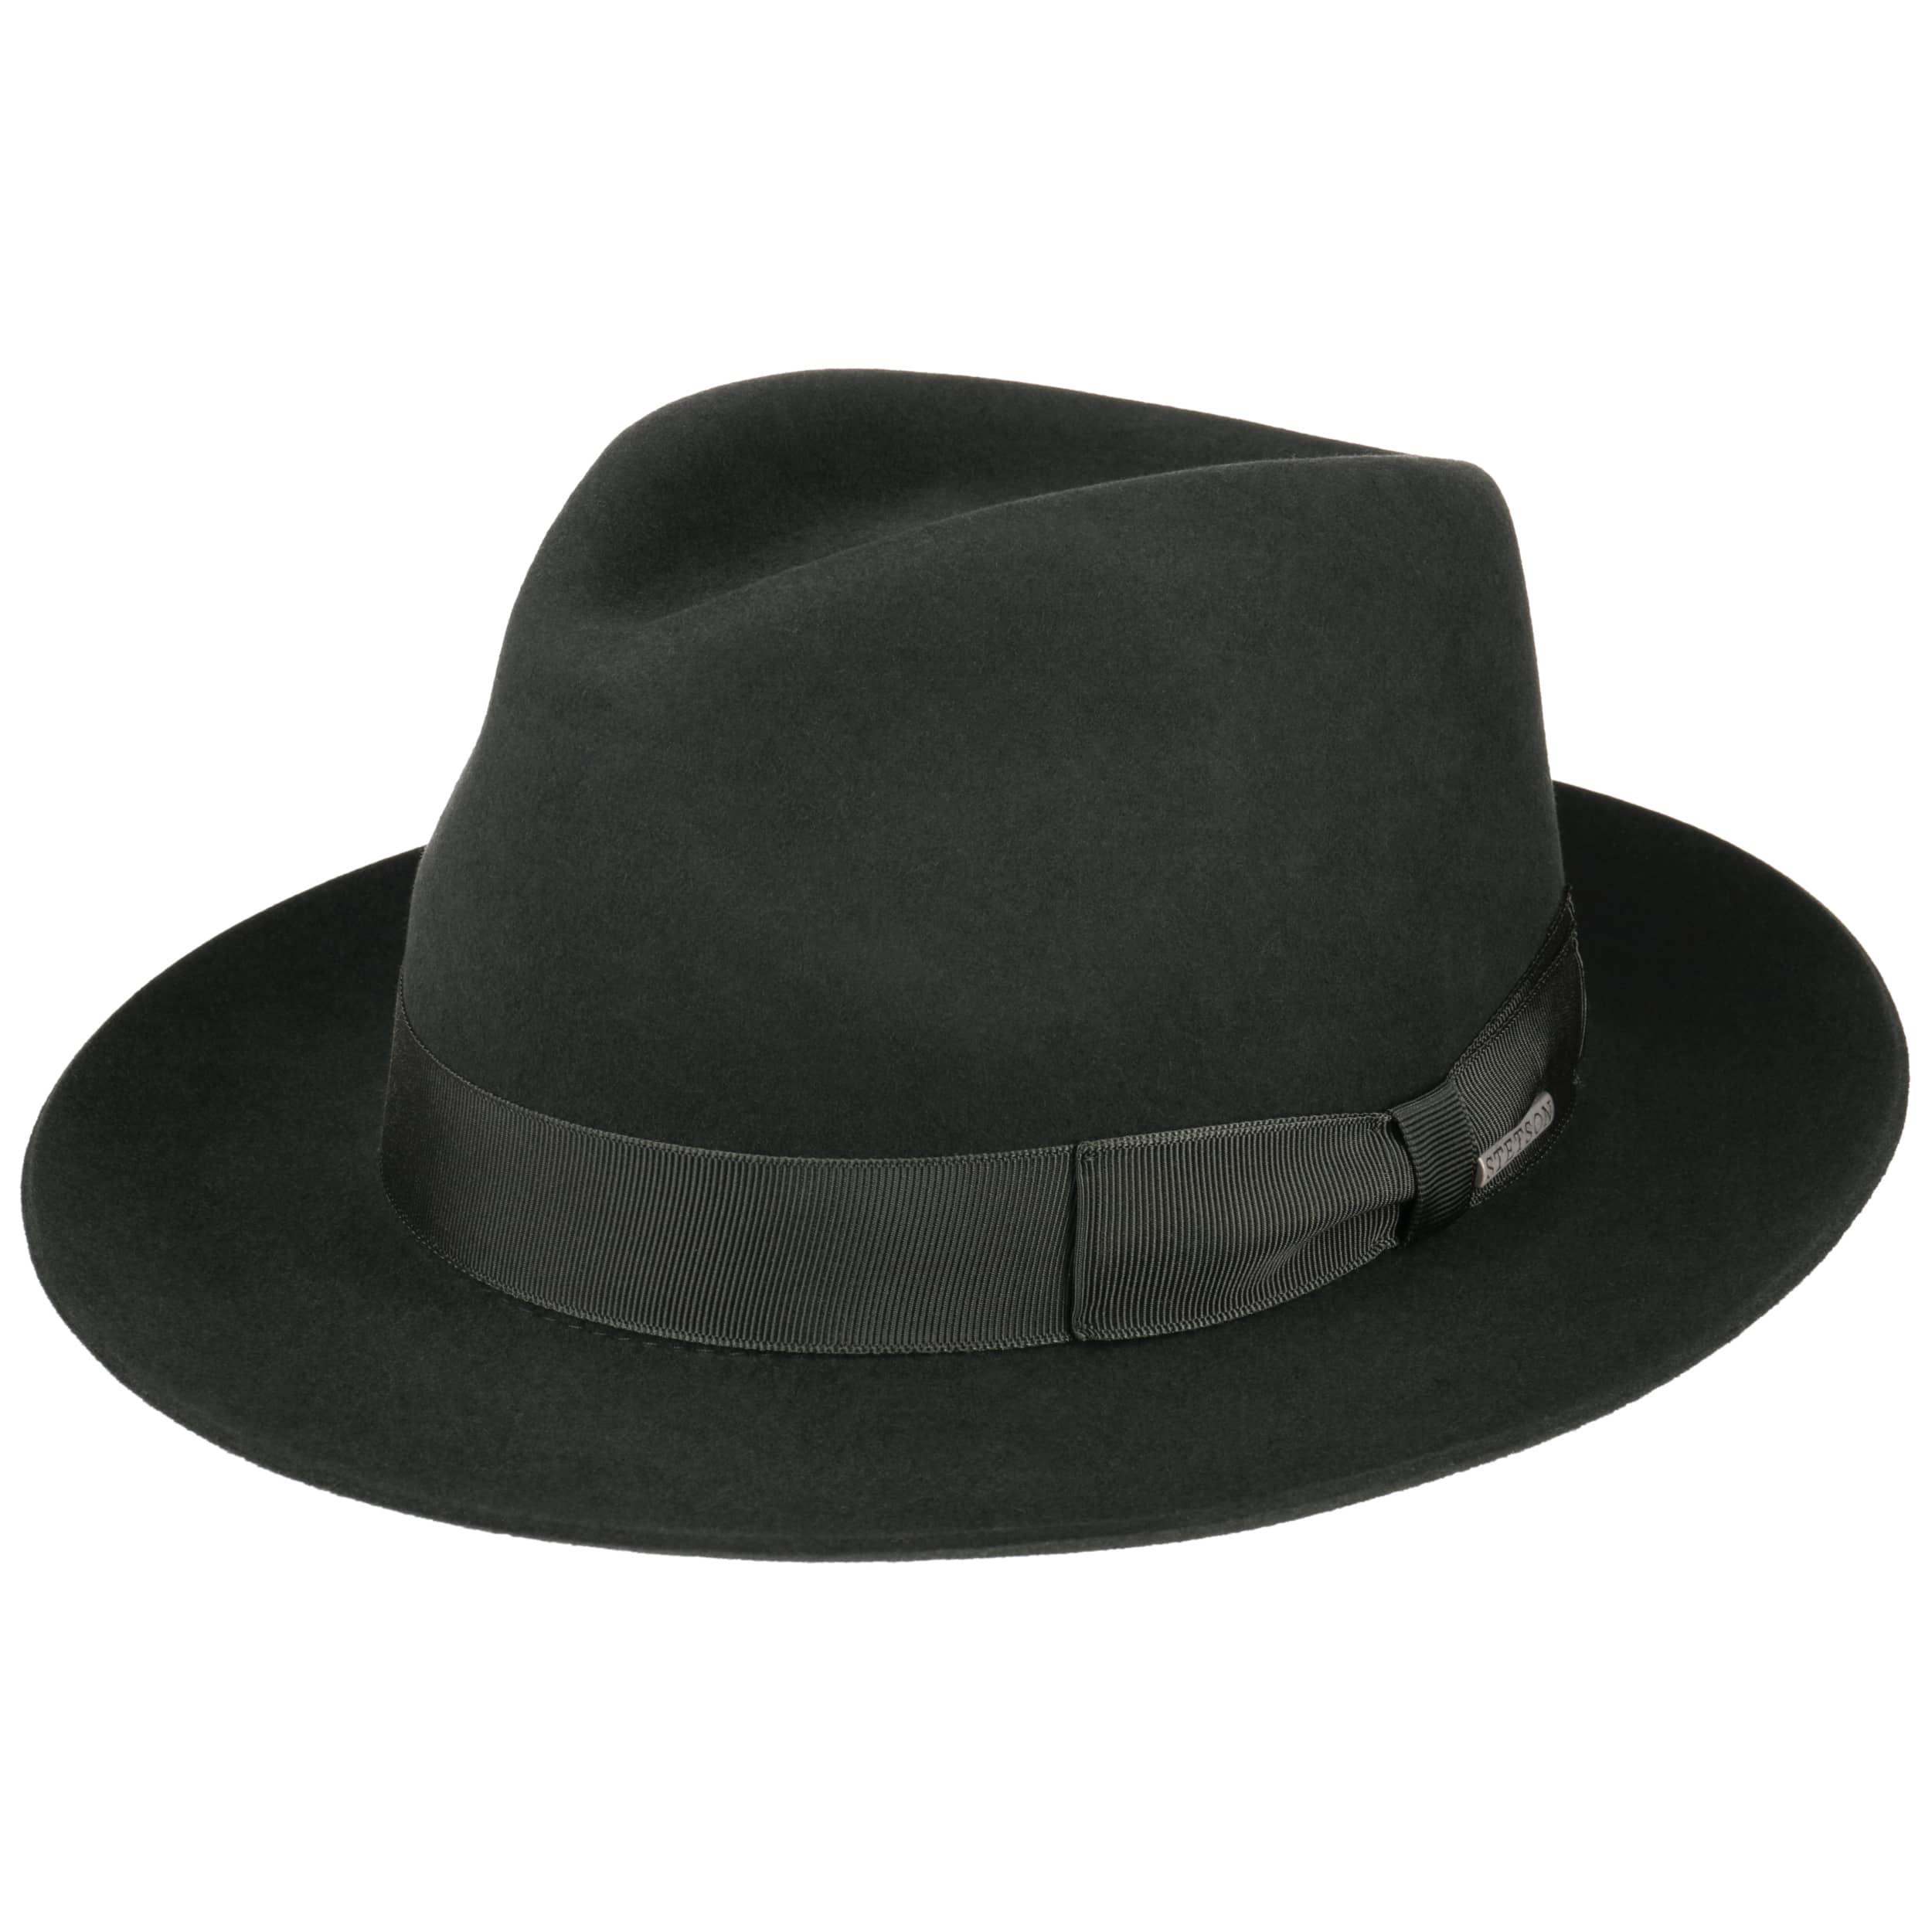 Penn Bogart Hat by Stetson - 169,00